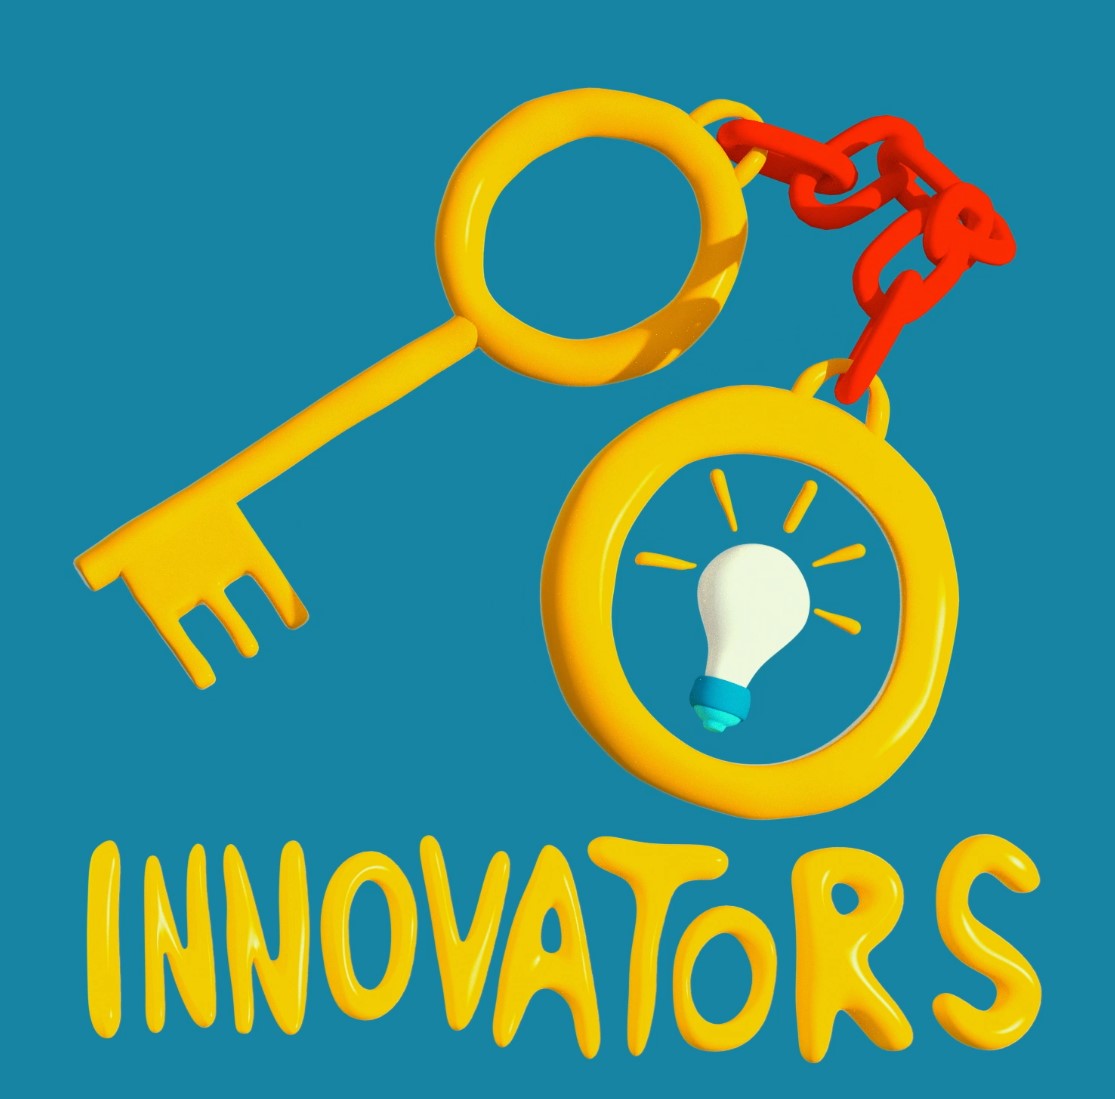 The Innovators Key #52